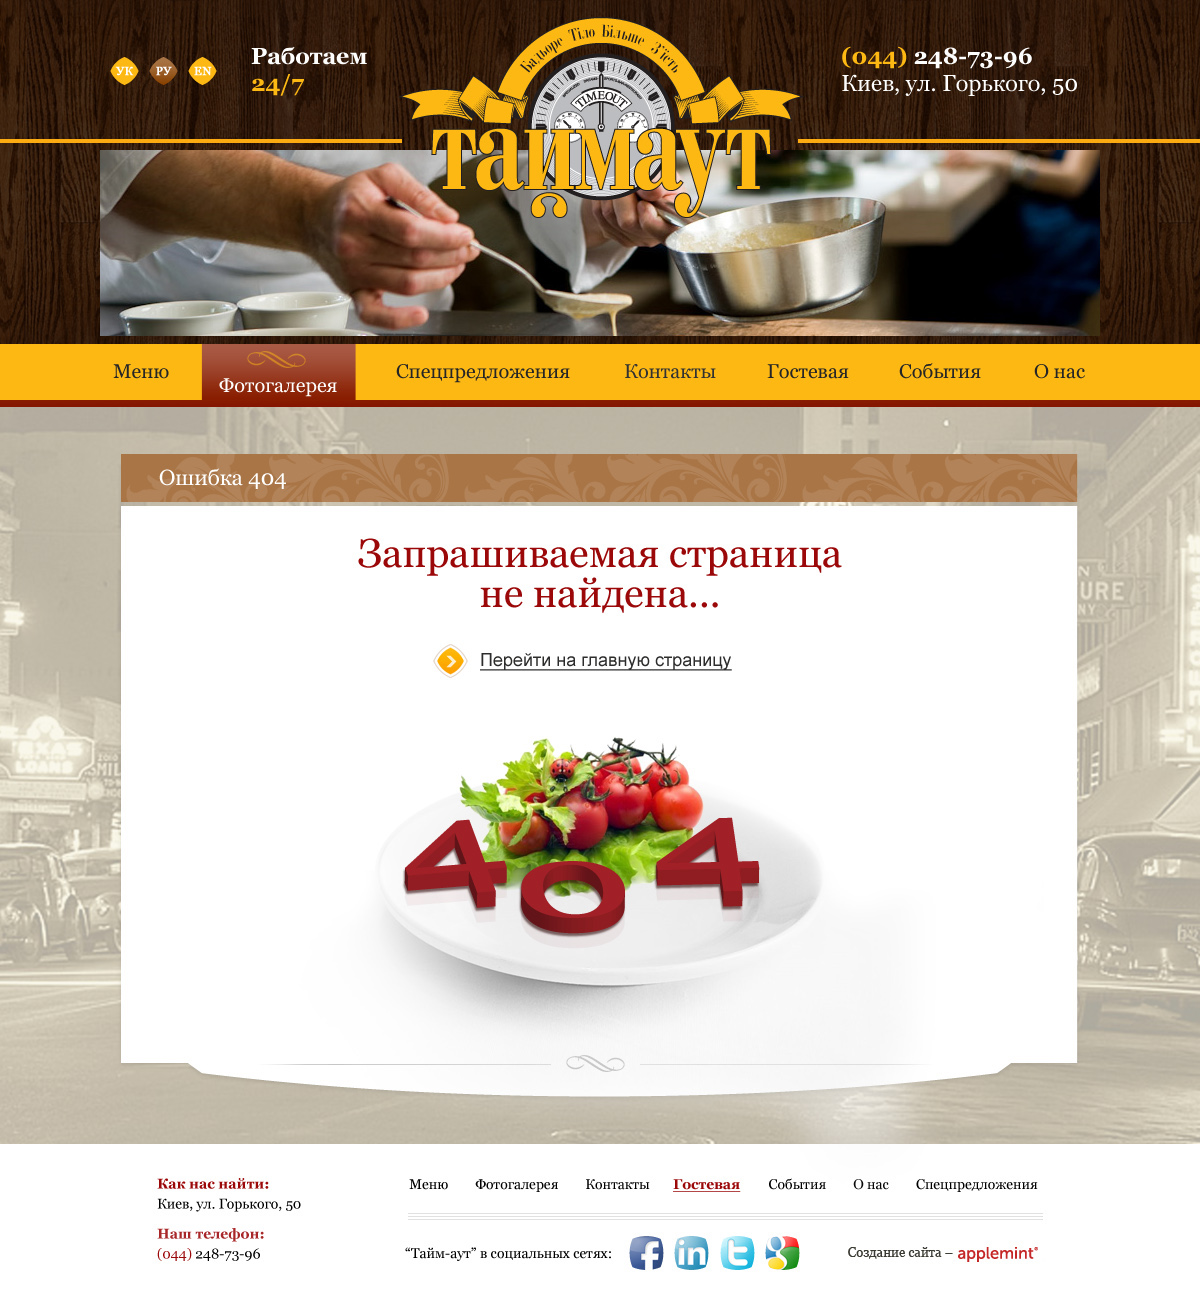 timeout light KIND friendly restaurant  delicious Food  kiev ukraine applemint